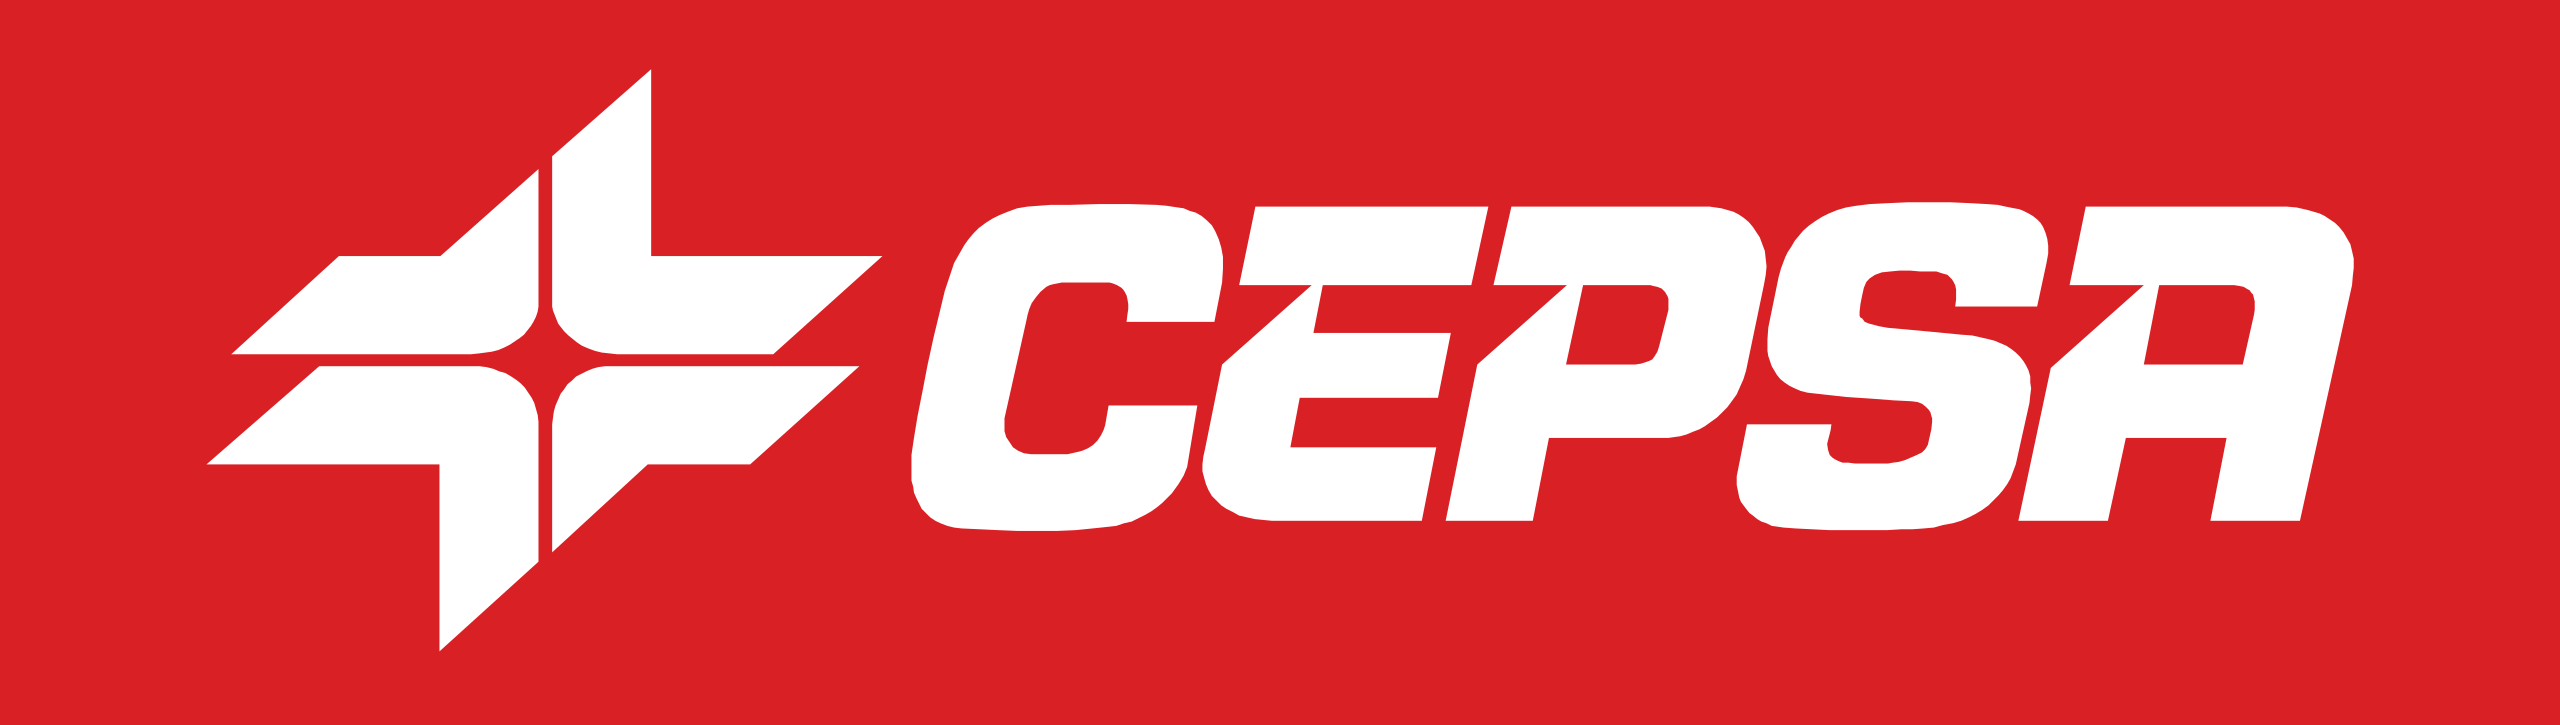 Cepsa logo